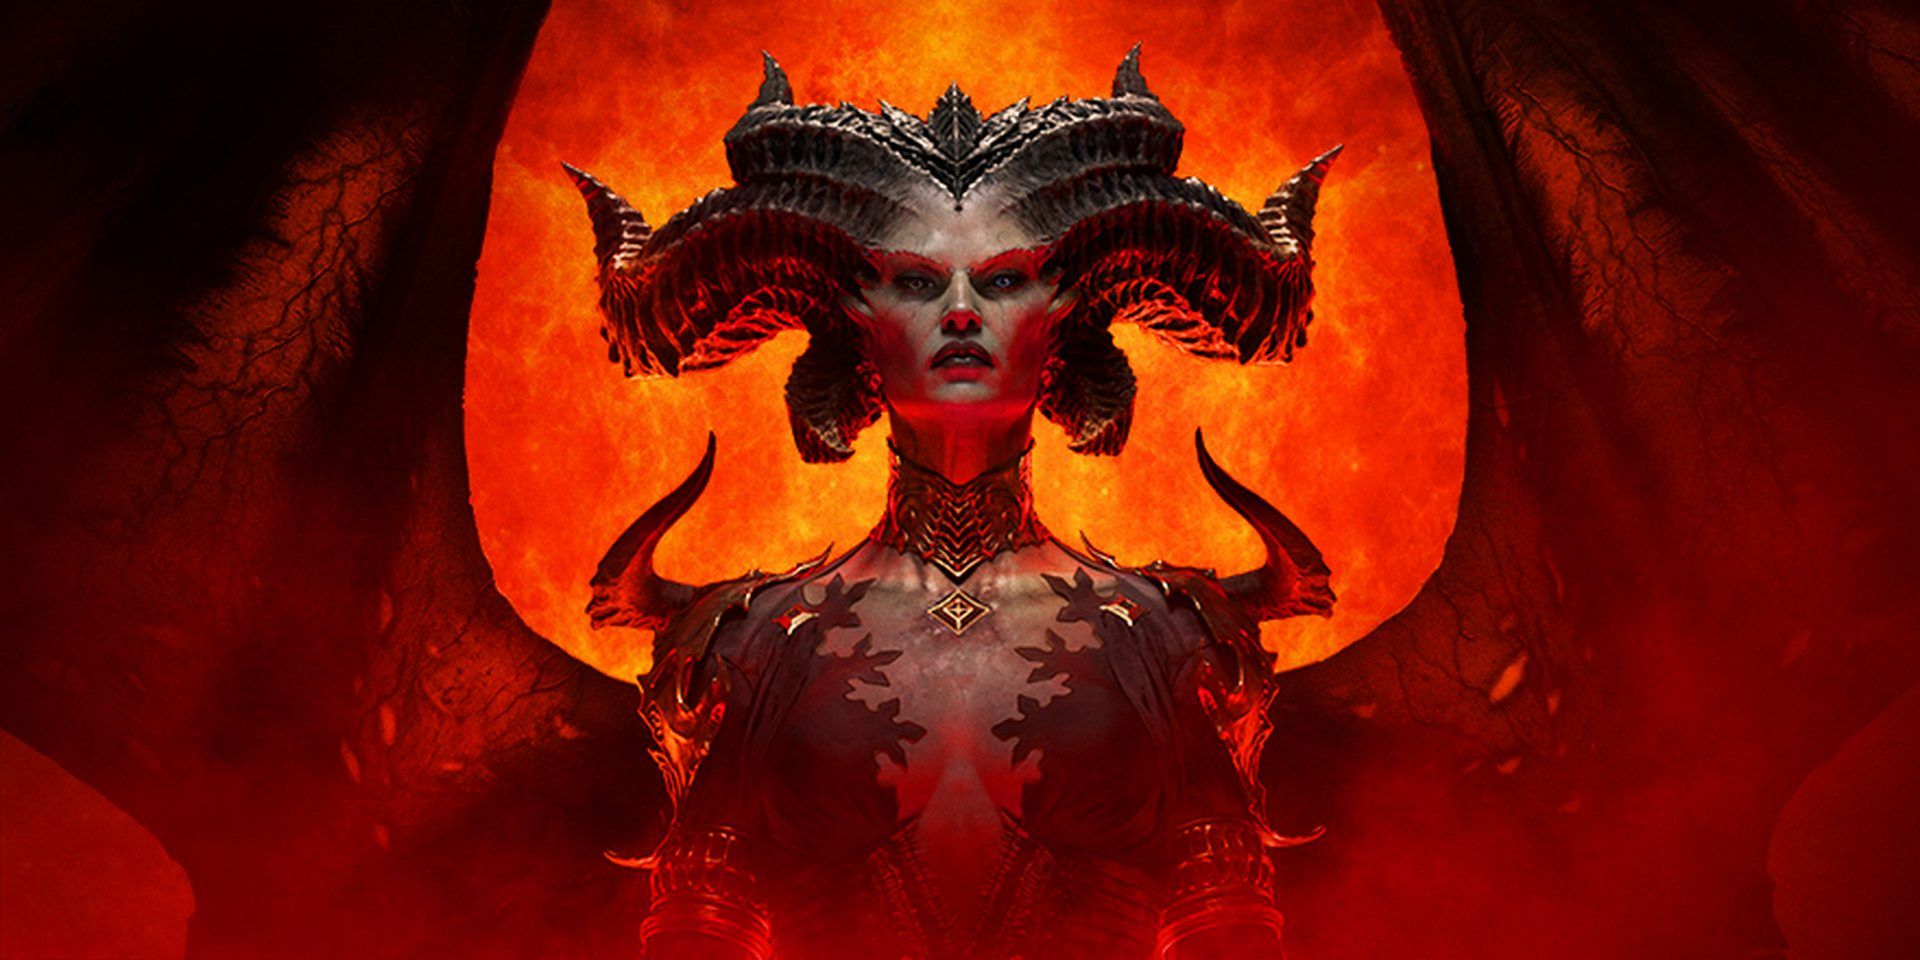 Diablo 4 preorder bonuses, release date, and more